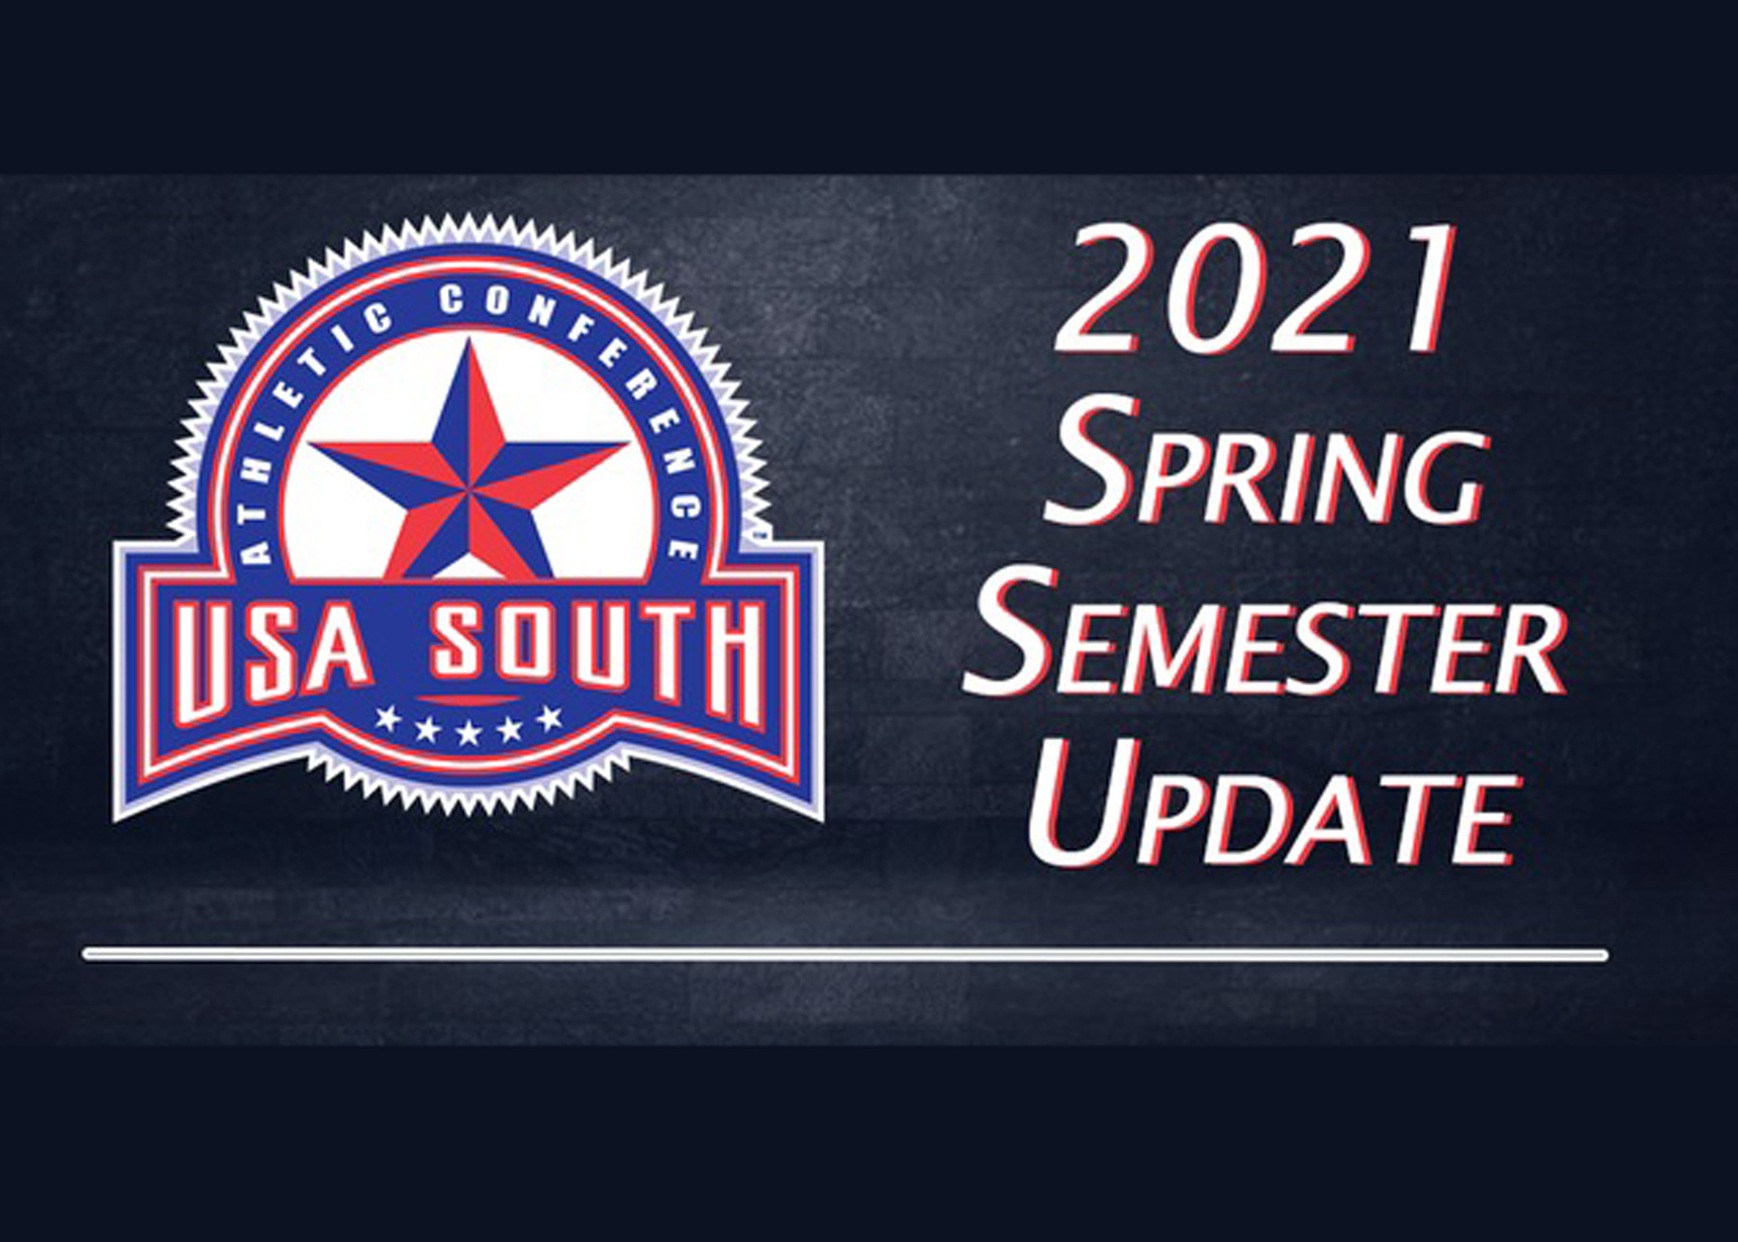 USA South 2021 Spring Semester Update